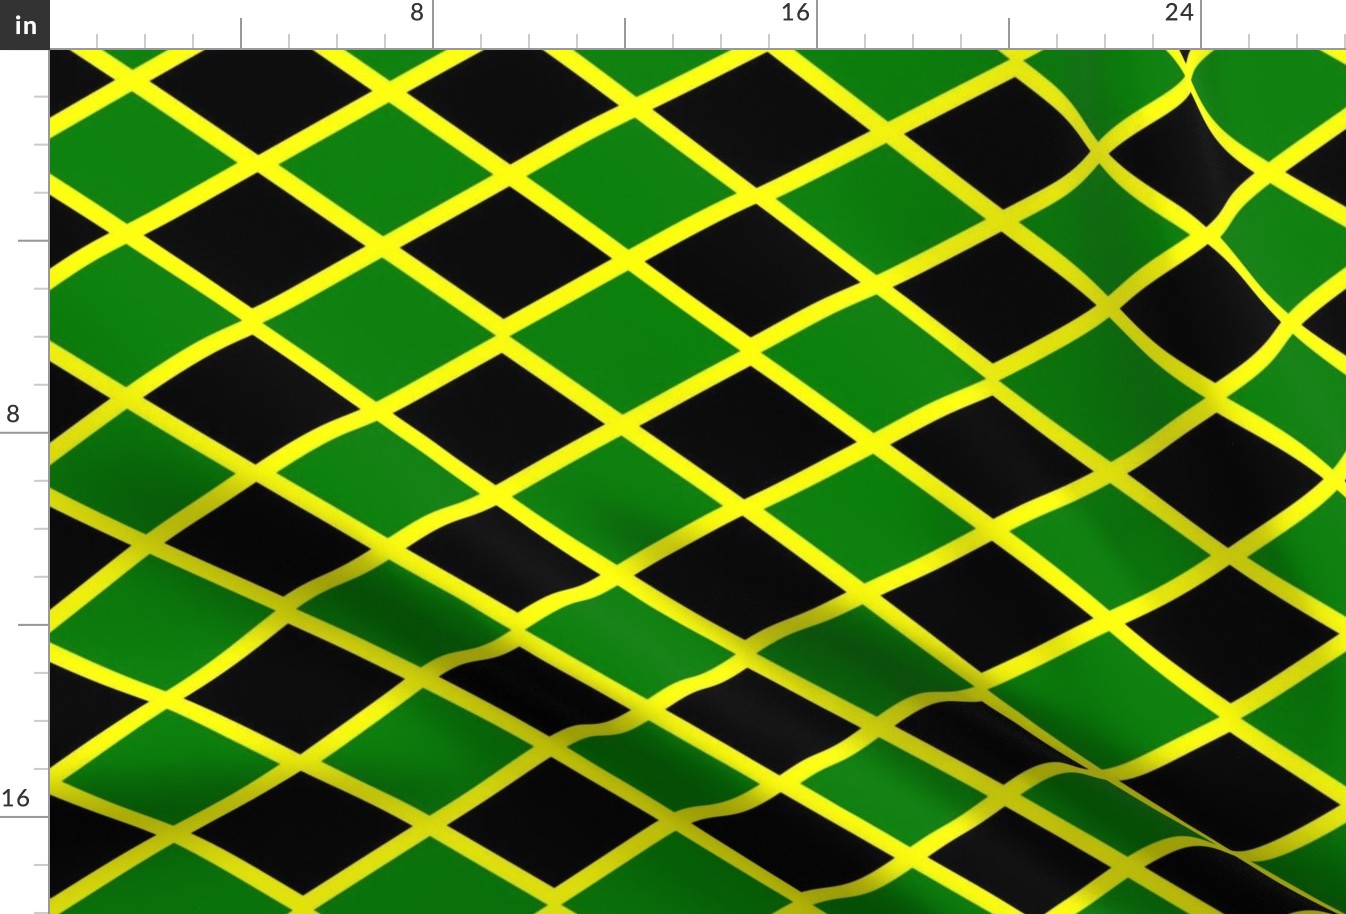 Jamaica Flag Pattern